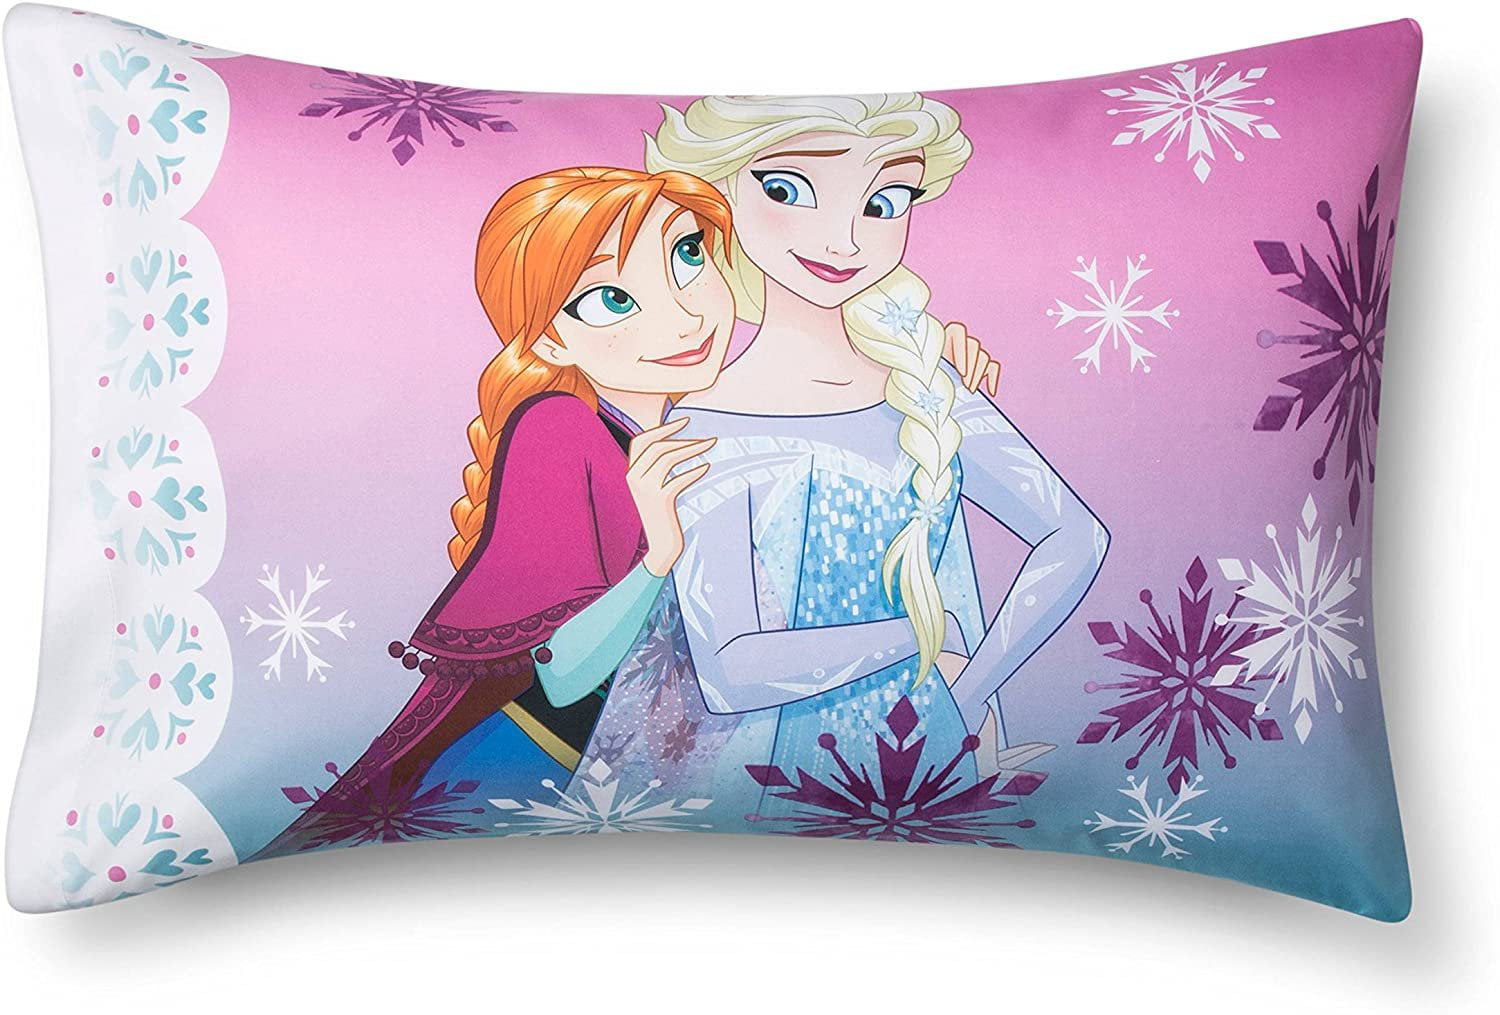 Disney Pillowcases shams 1pcs Cartoon Frozen Elsa and Anna pink